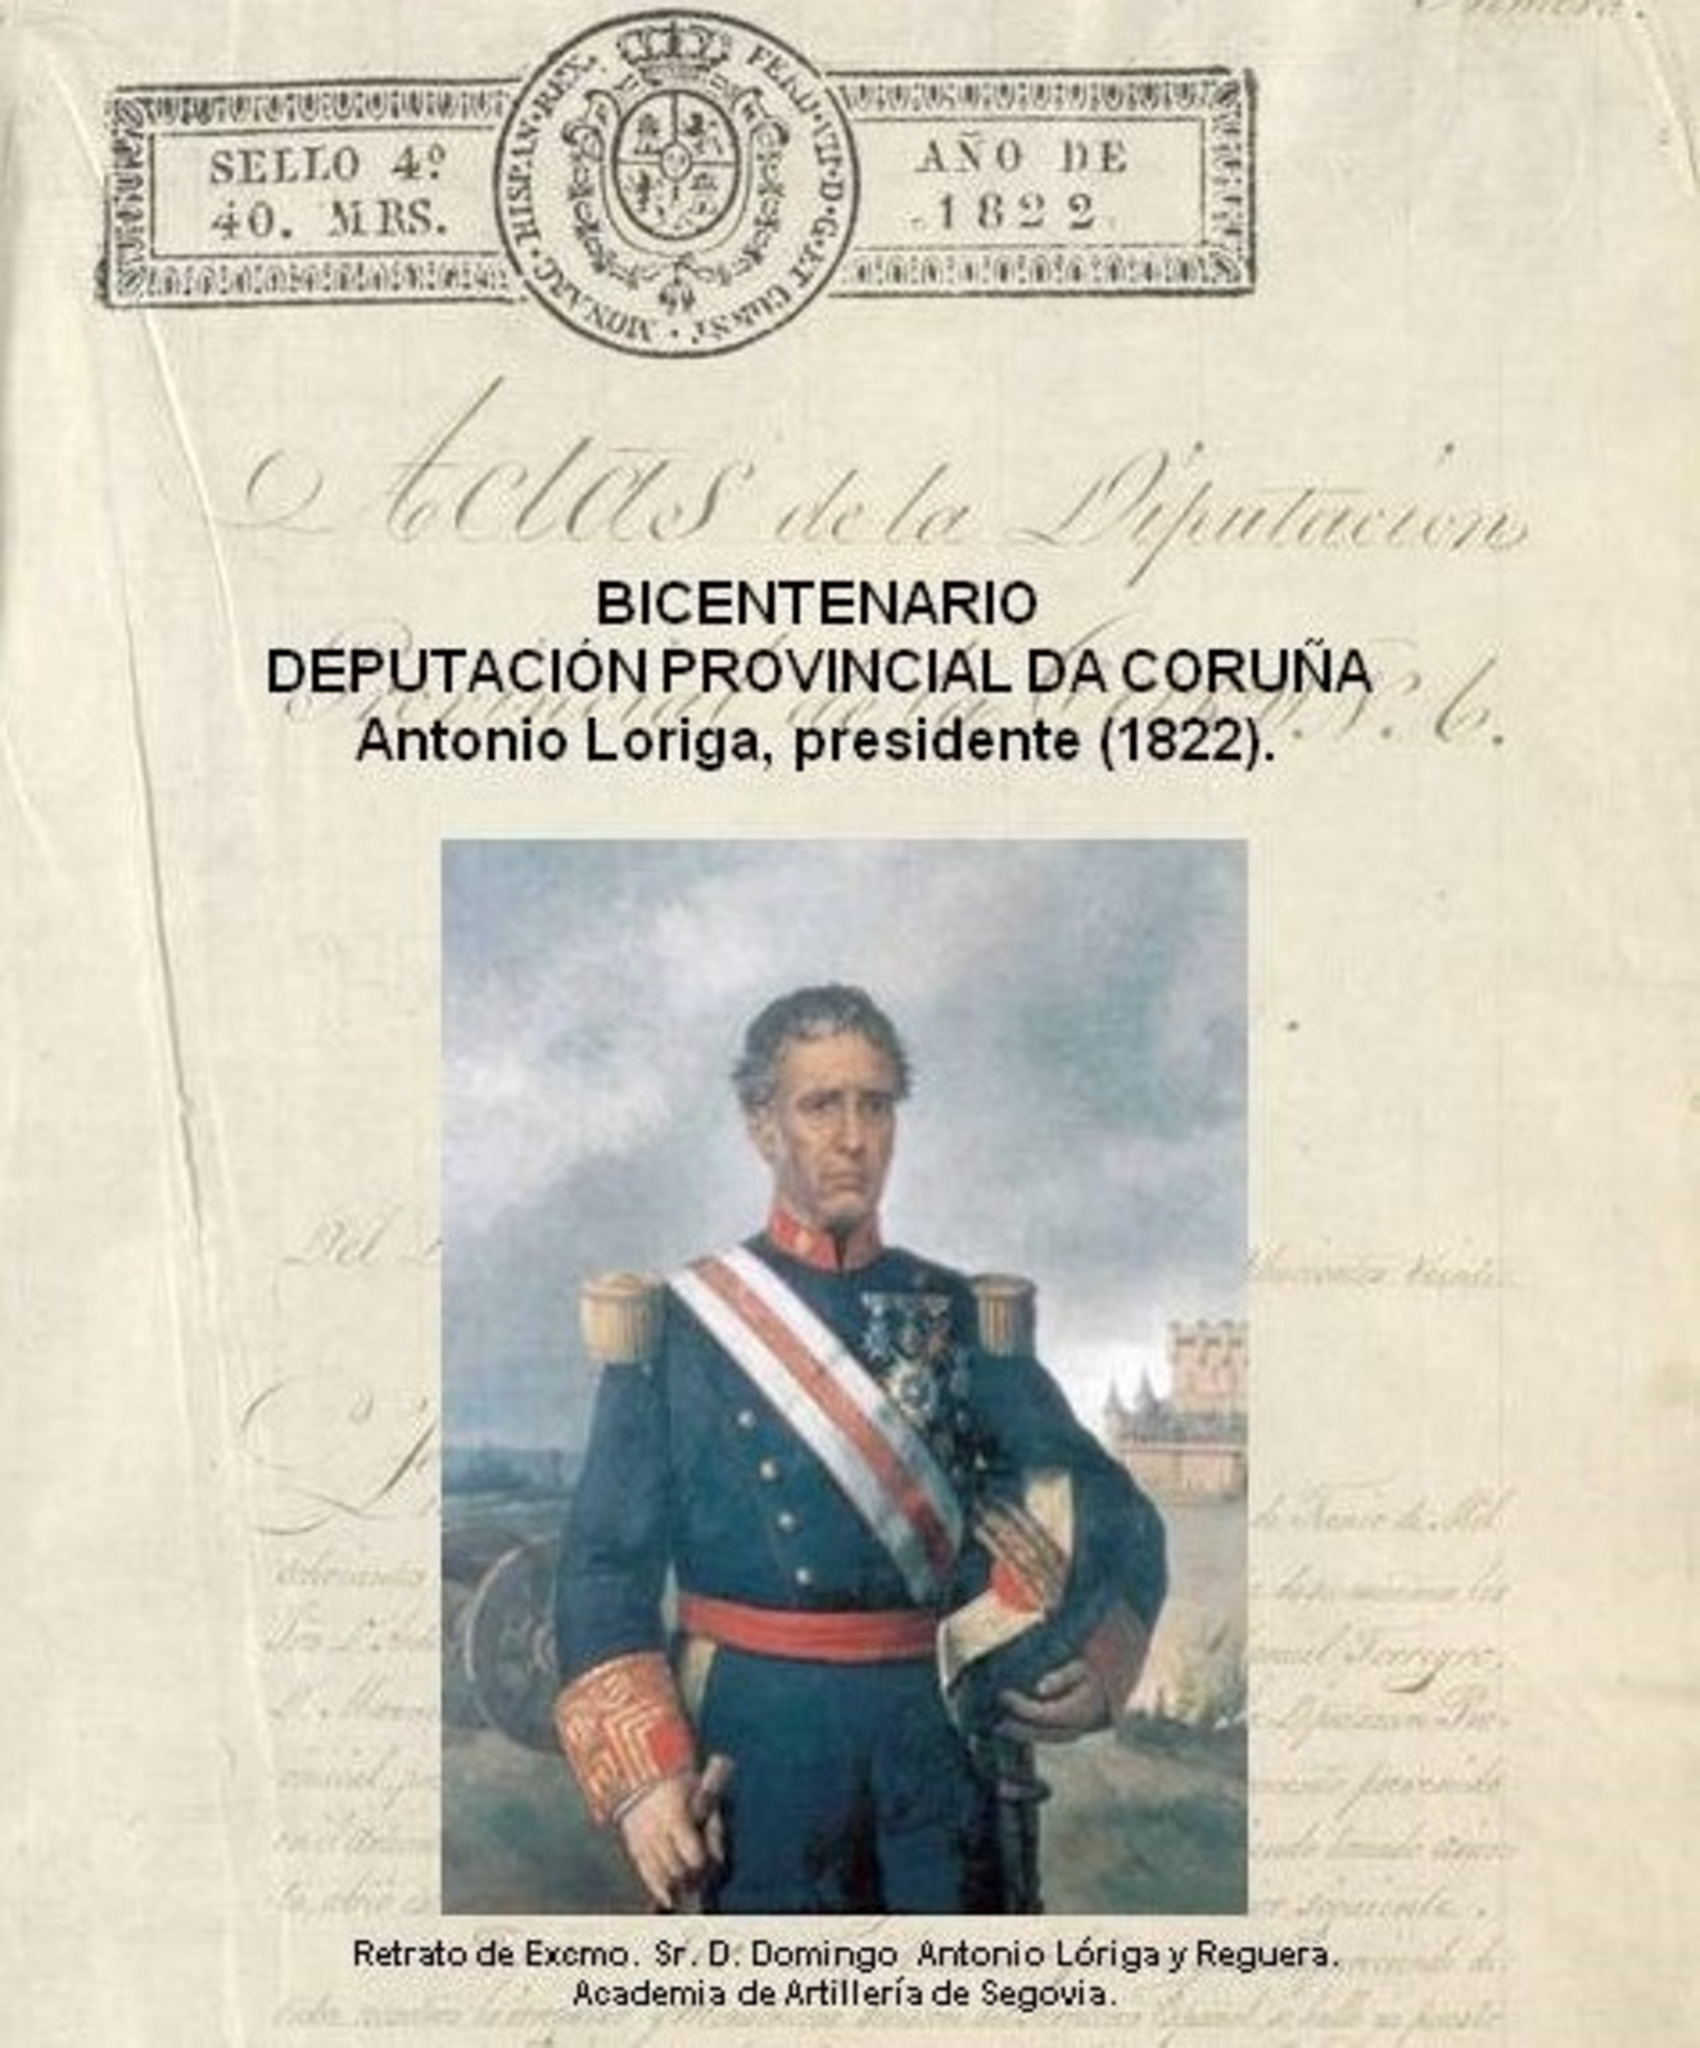 Bicentenario Deputación Provincial da Coruña. Antonio Loriga, presidente (1822)